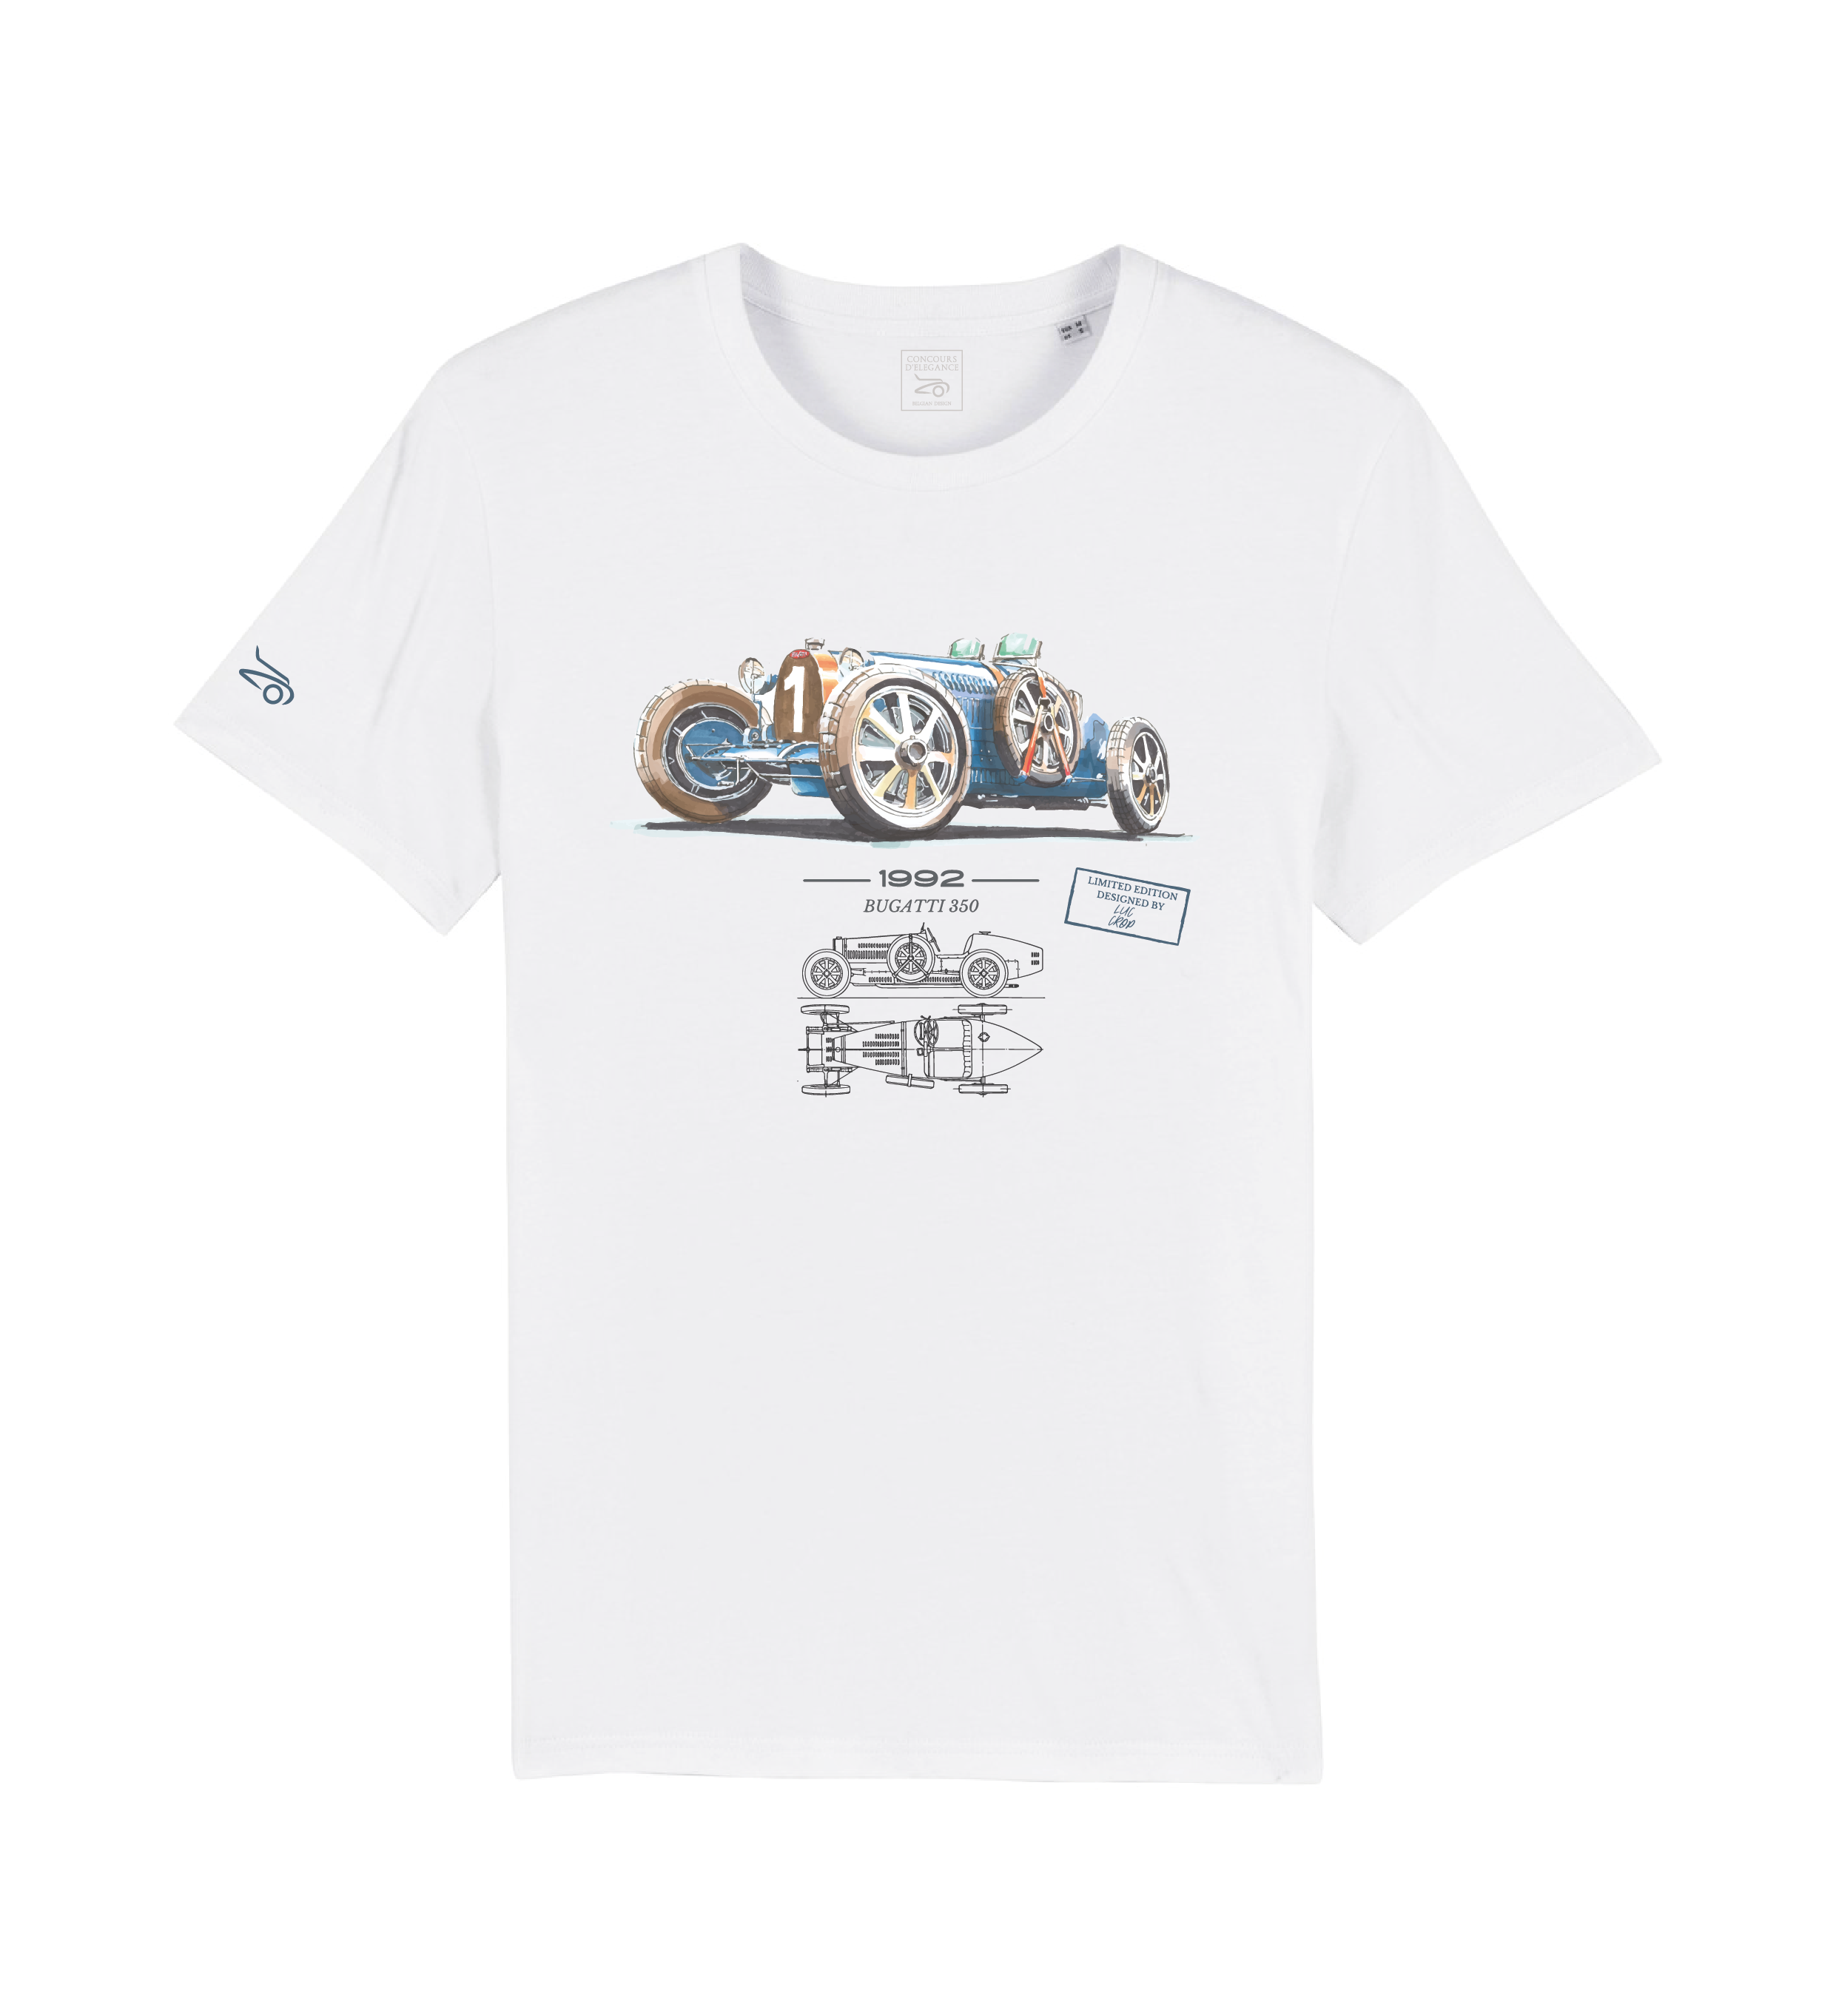 Limited Edition by Luc Crop: Bugatti 1 T-Shirt